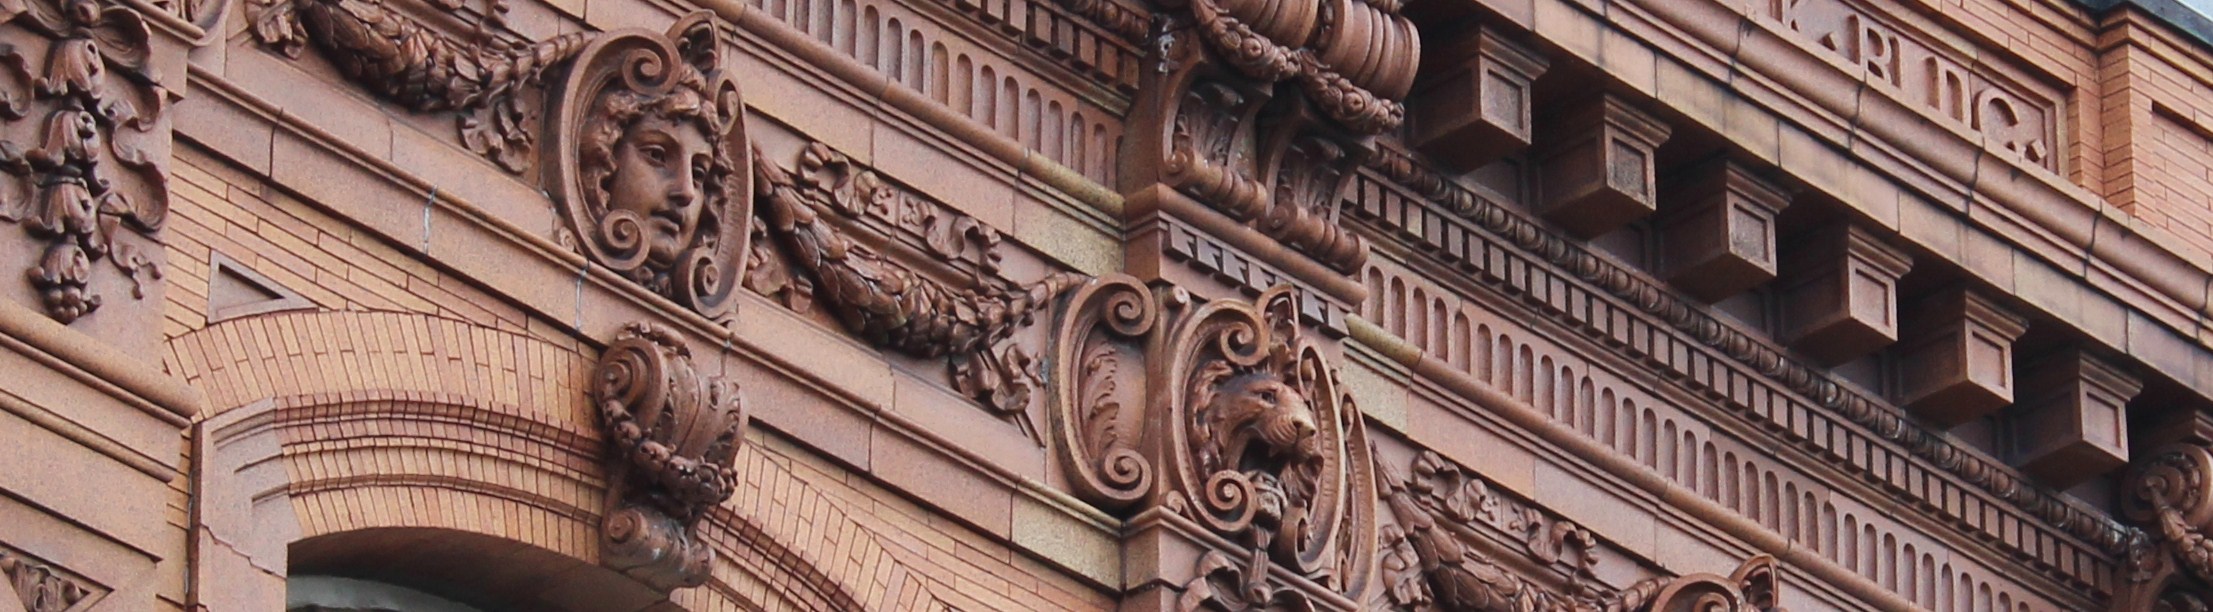 Ornate Building Facade